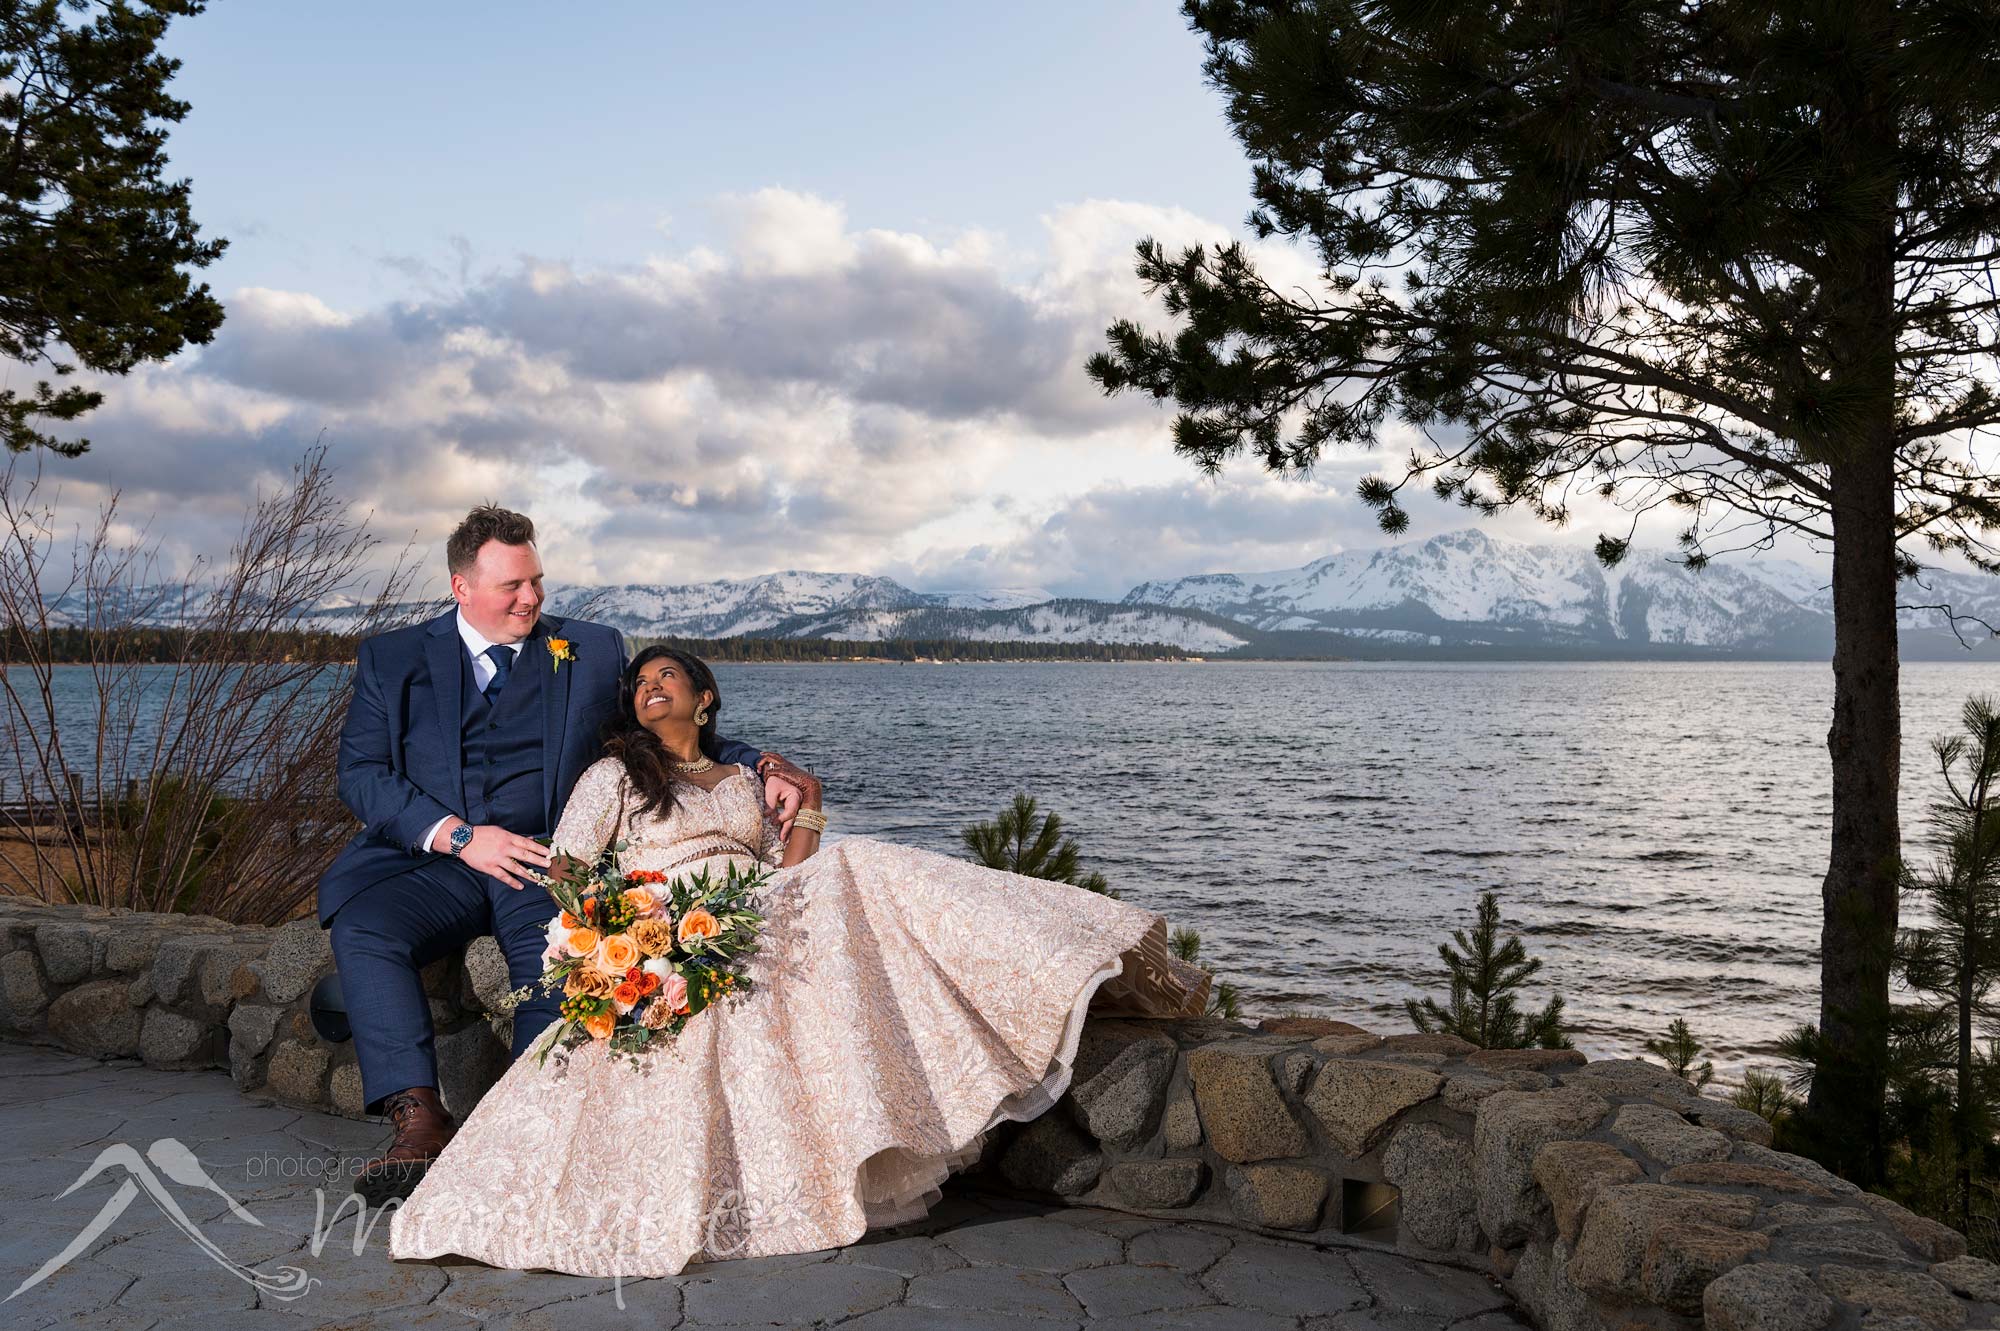 Edgewood Tahoe wedding photography, Priya and Chris, Indian wedding, bride and groom